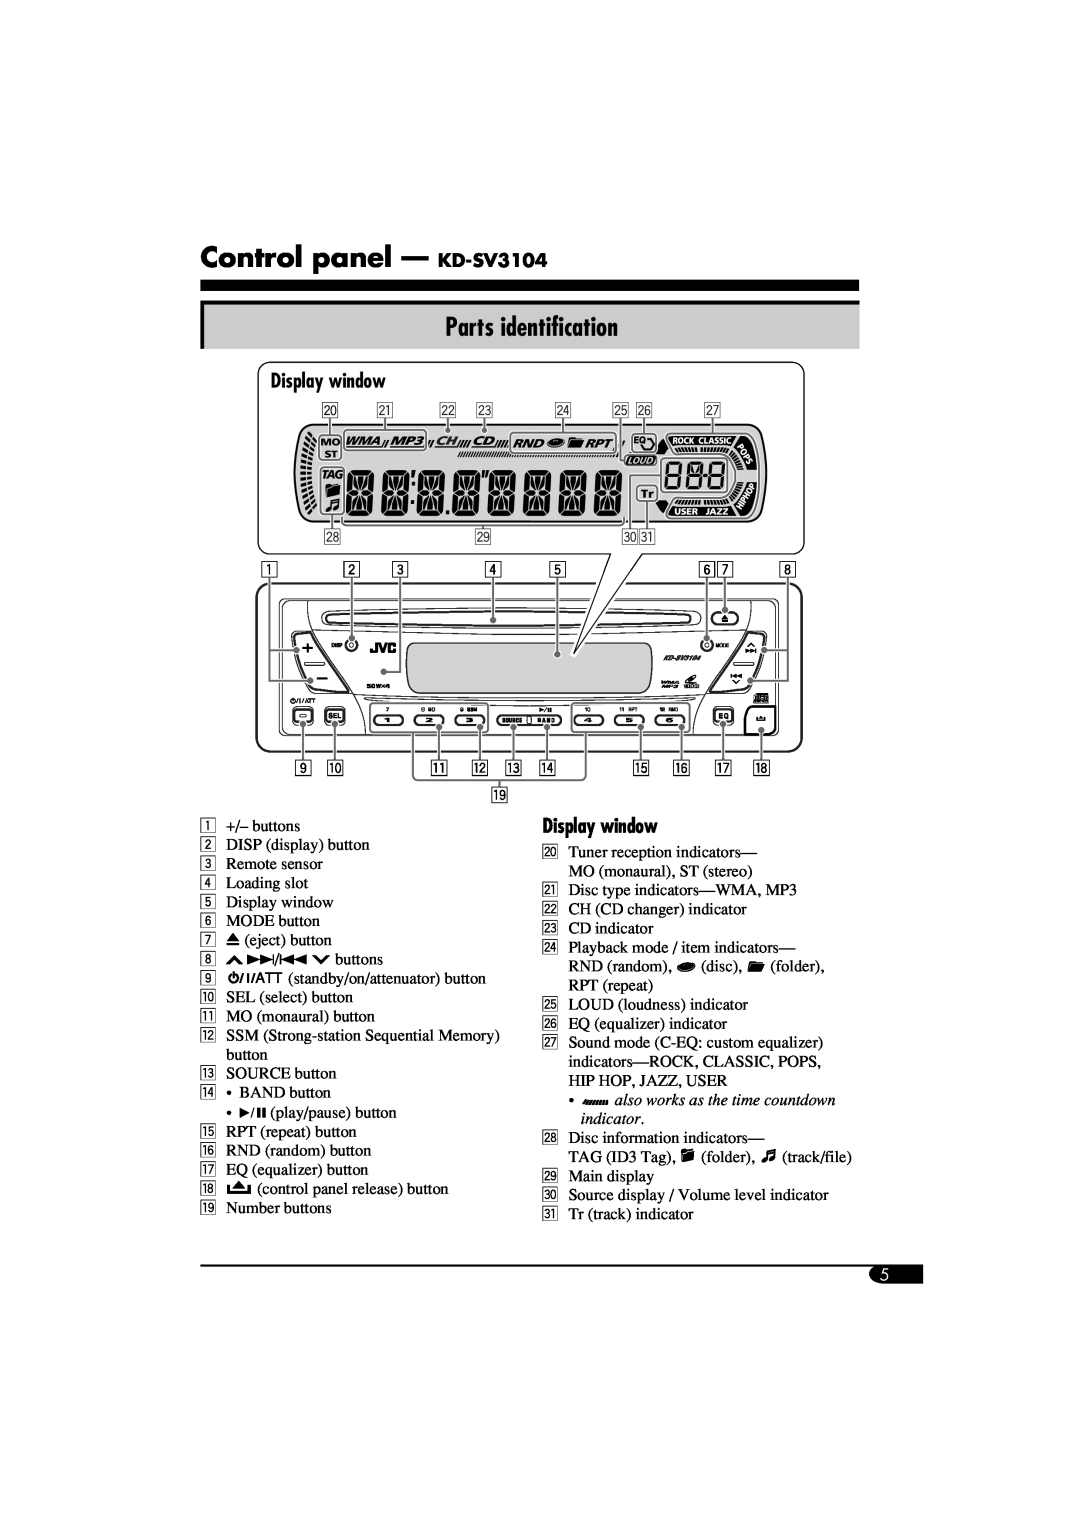 JVC manual Control panel — KD-SV3104, Parts identification, Display window 